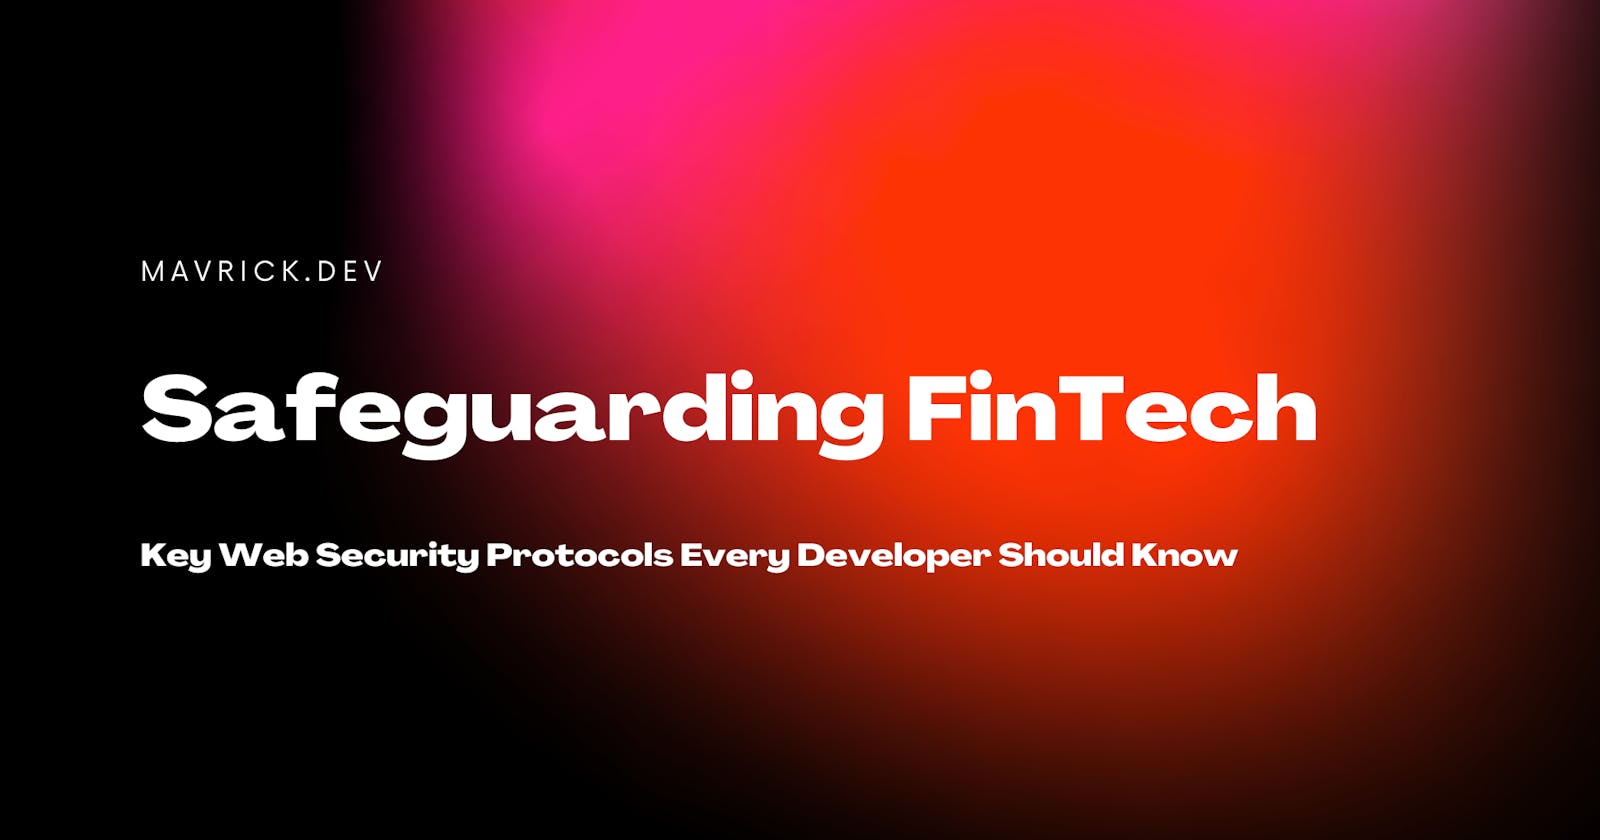 Safeguarding FinTech: Key Web Security Protocols Every Developer Should Know